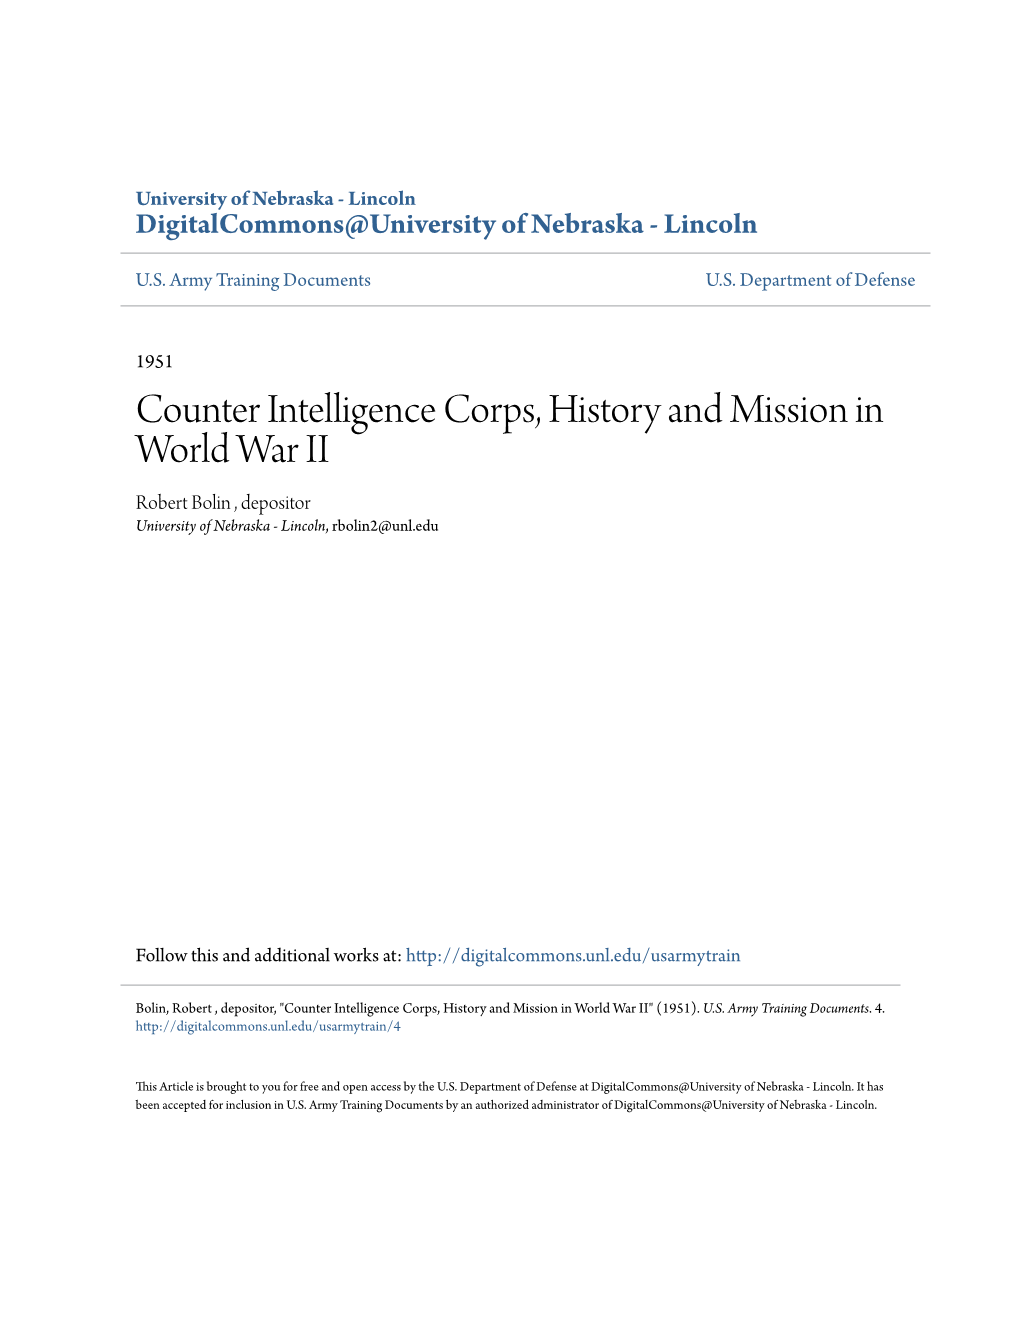 Counter Intelligence Corps, History and Mission in World War II Robert Bolin , Depositor University of Nebraska - Lincoln, Rbolin2@Unl.Edu